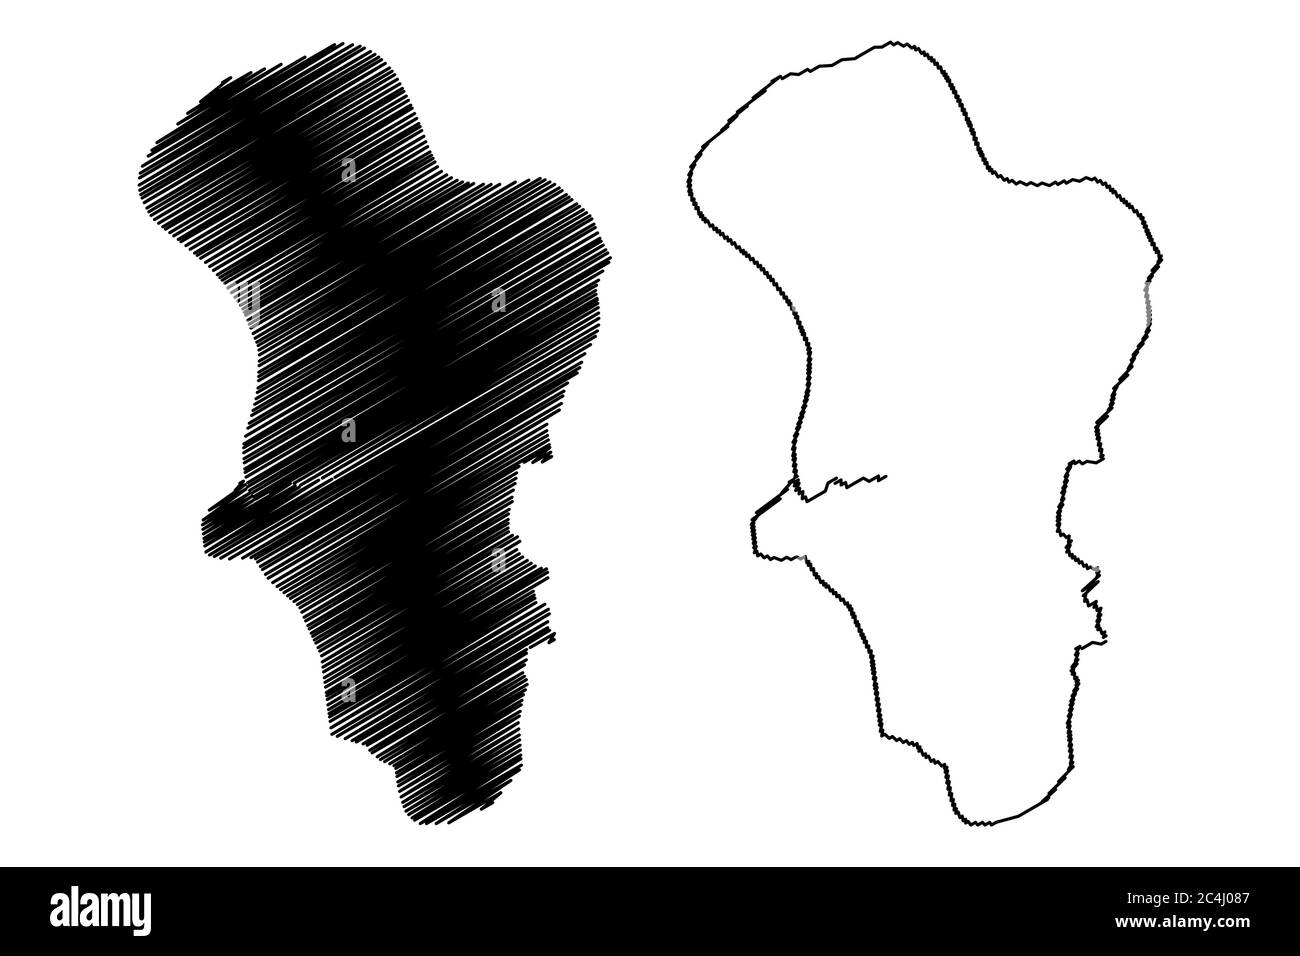 100,000 Angola political map Vector Images | Depositphotos